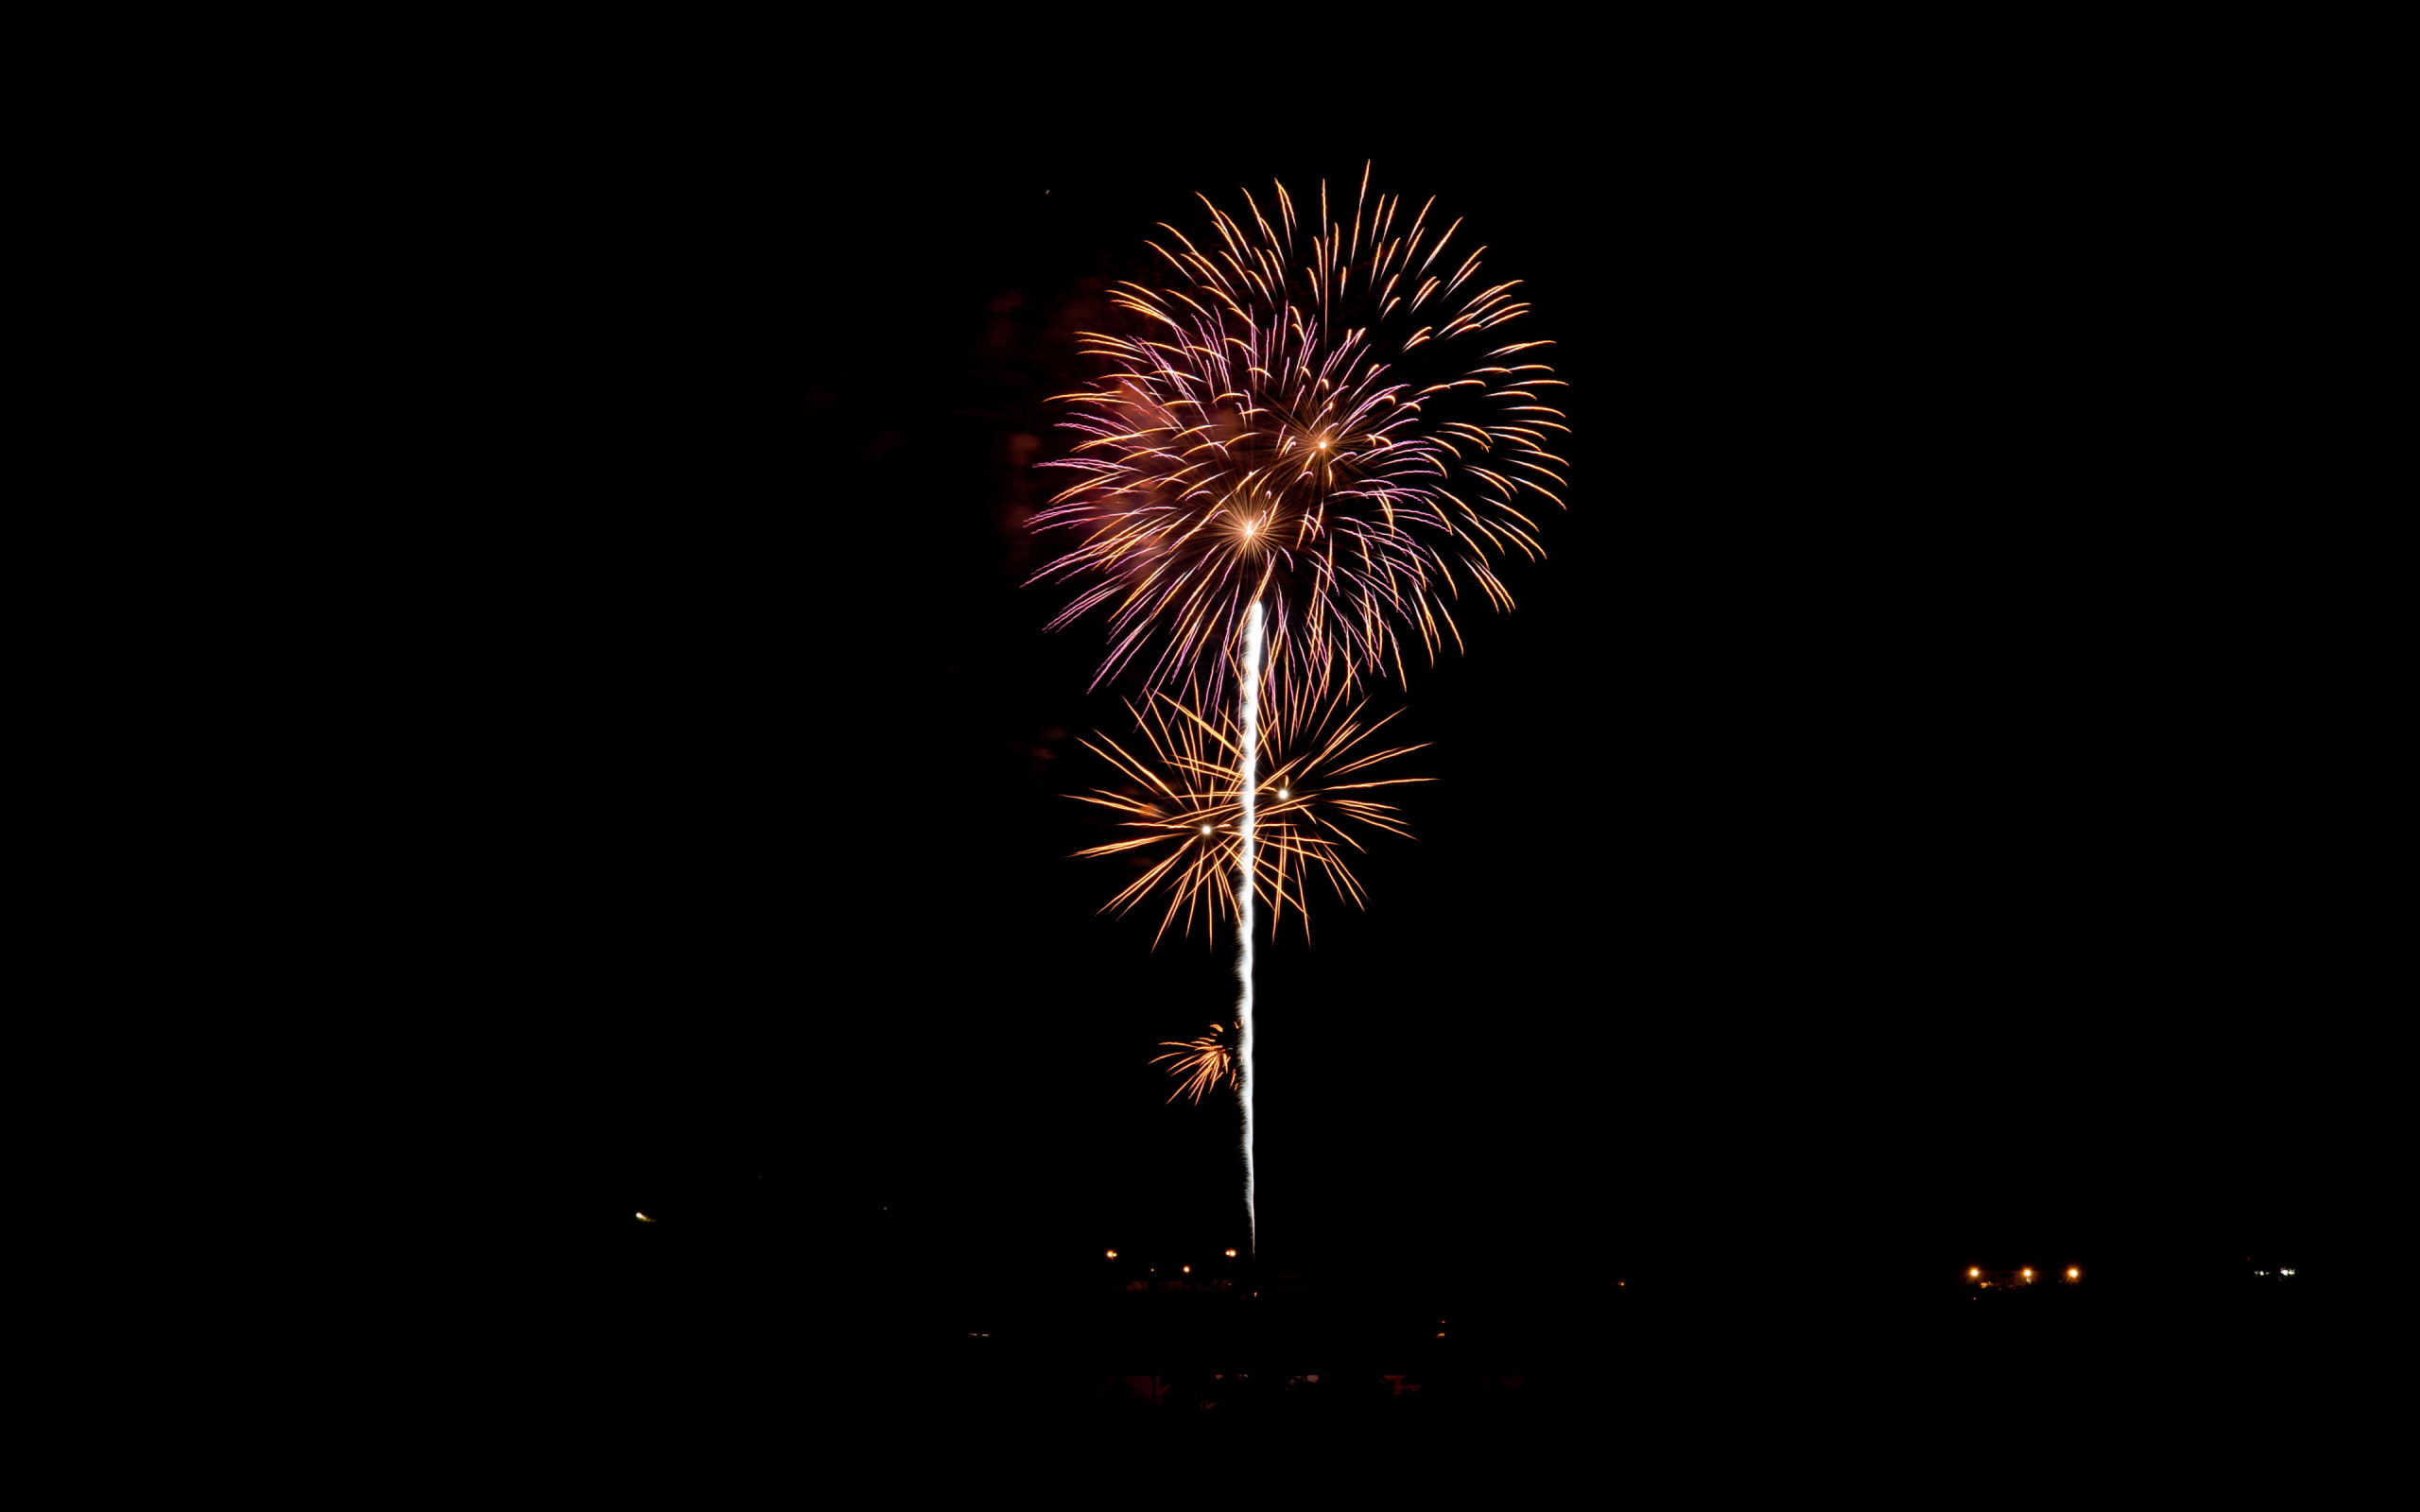 Fireworks, Black Background, Minimalism, red and orange fireworks